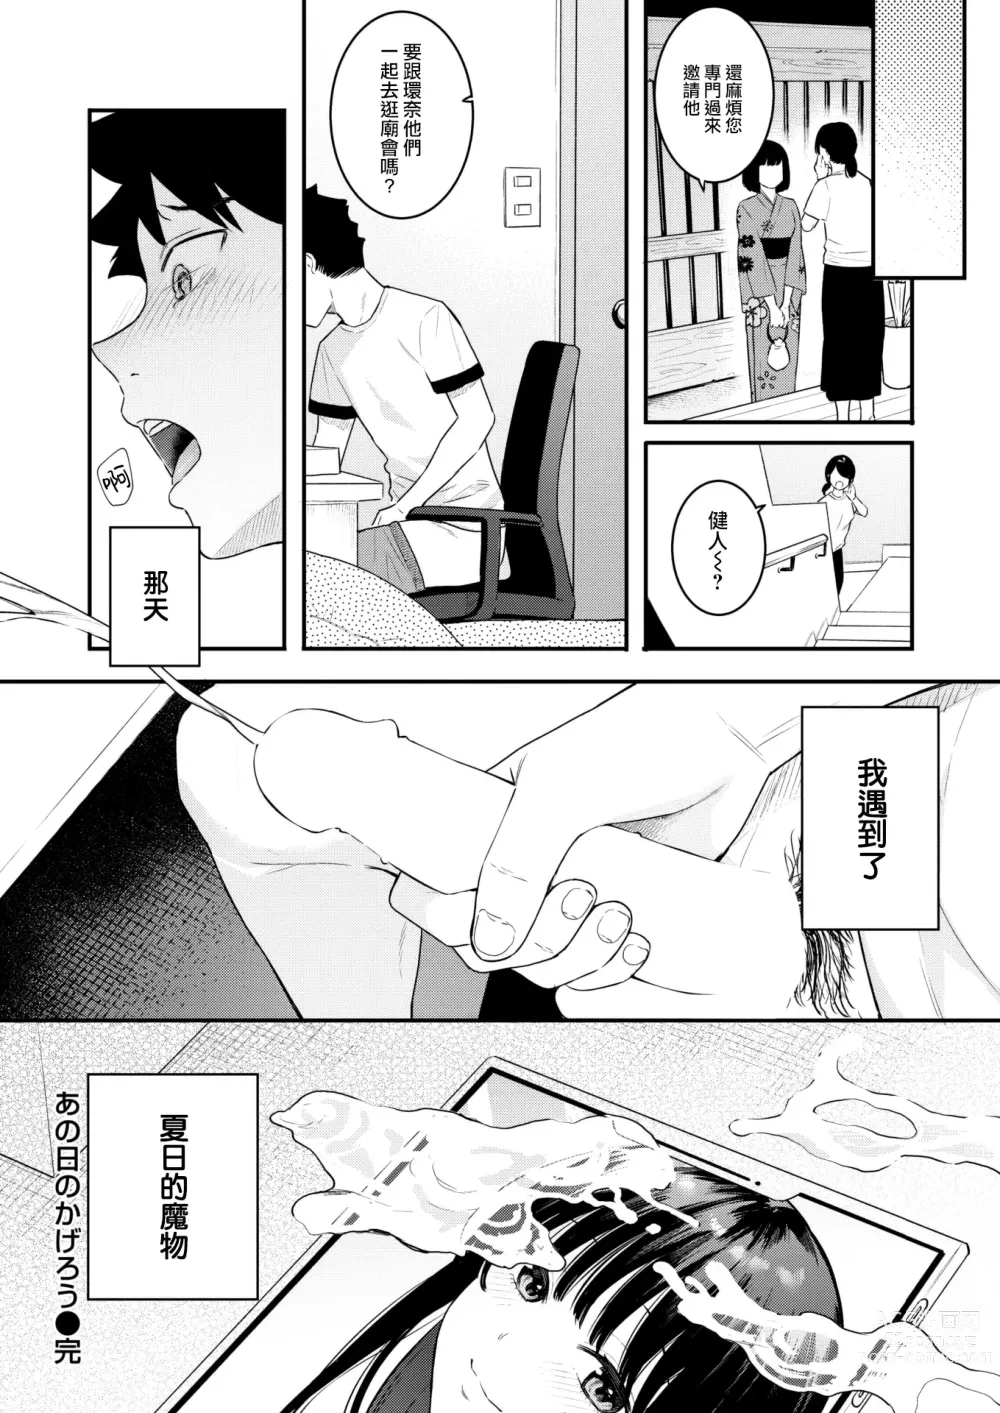 Page 27 of manga Anohi no kagero